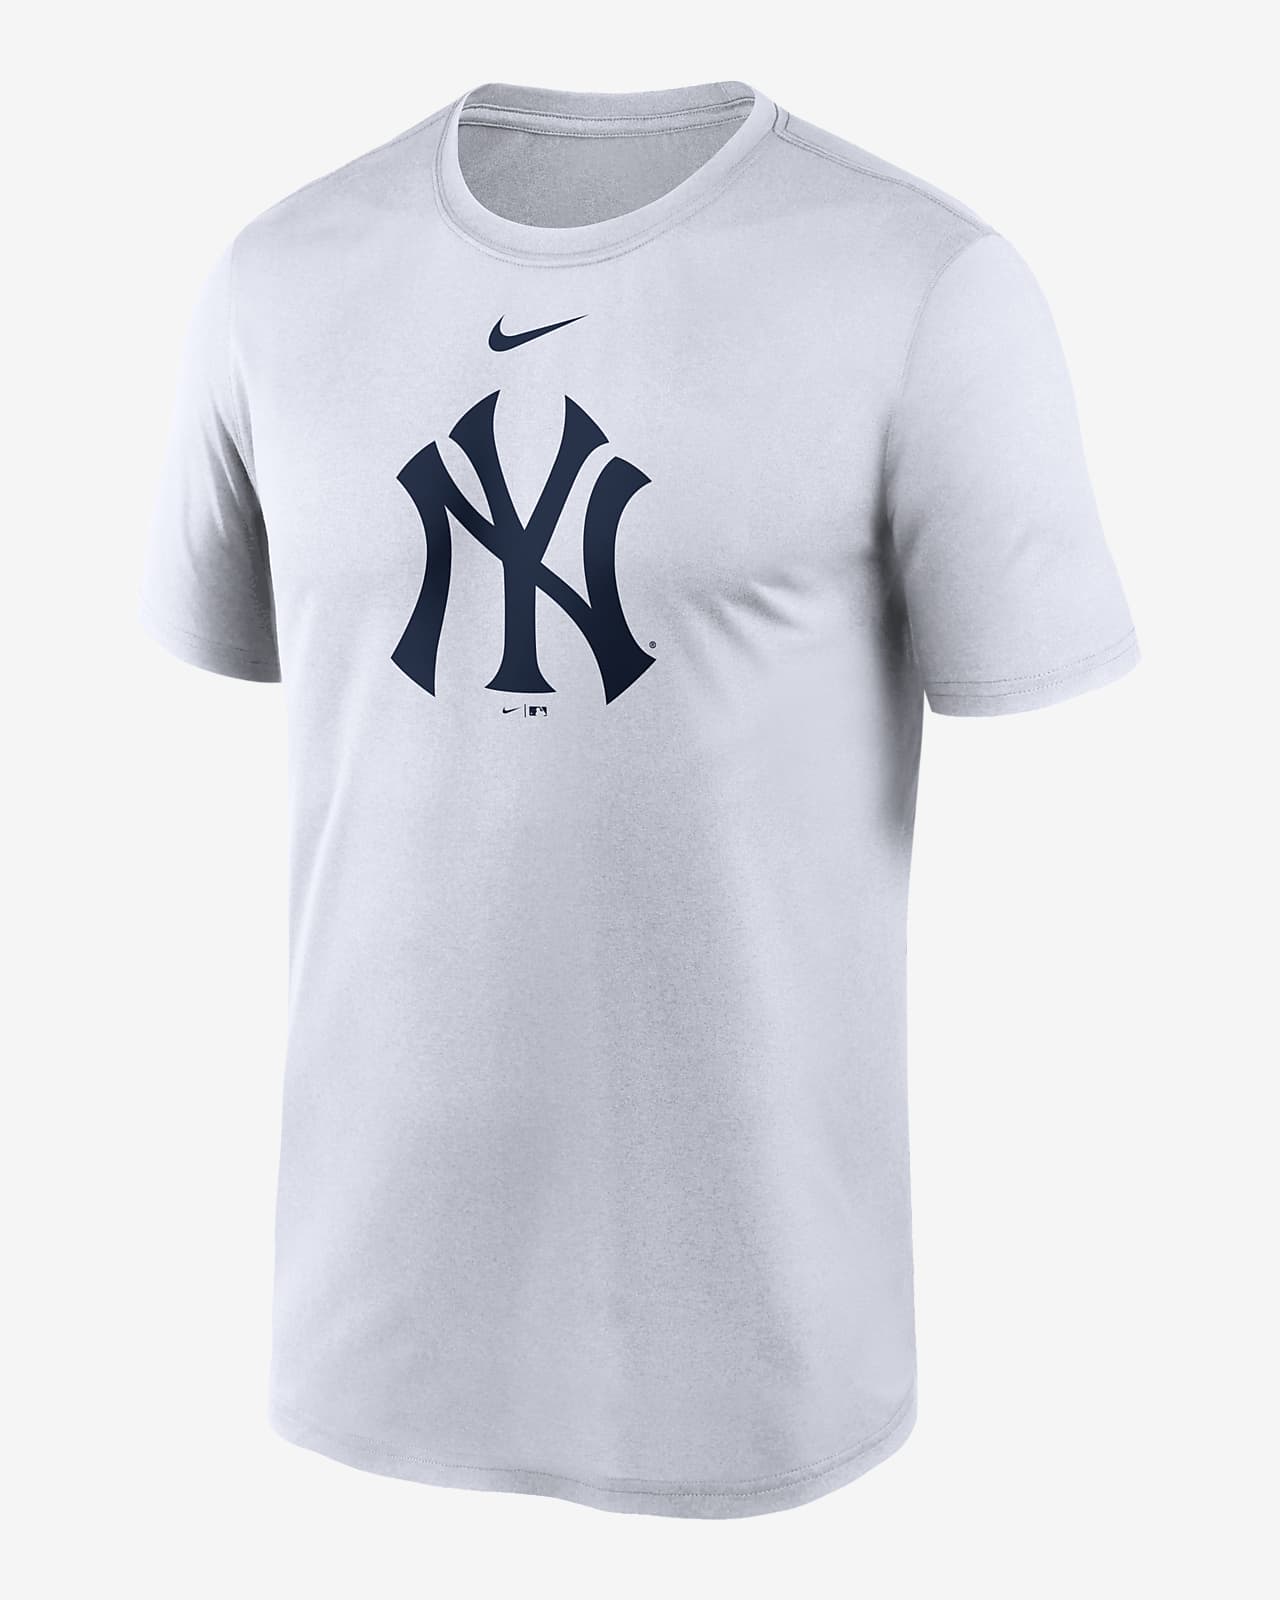 Nike Dri-FIT Logo Legend (MLB New York Yankees) Men's T-Shirt.